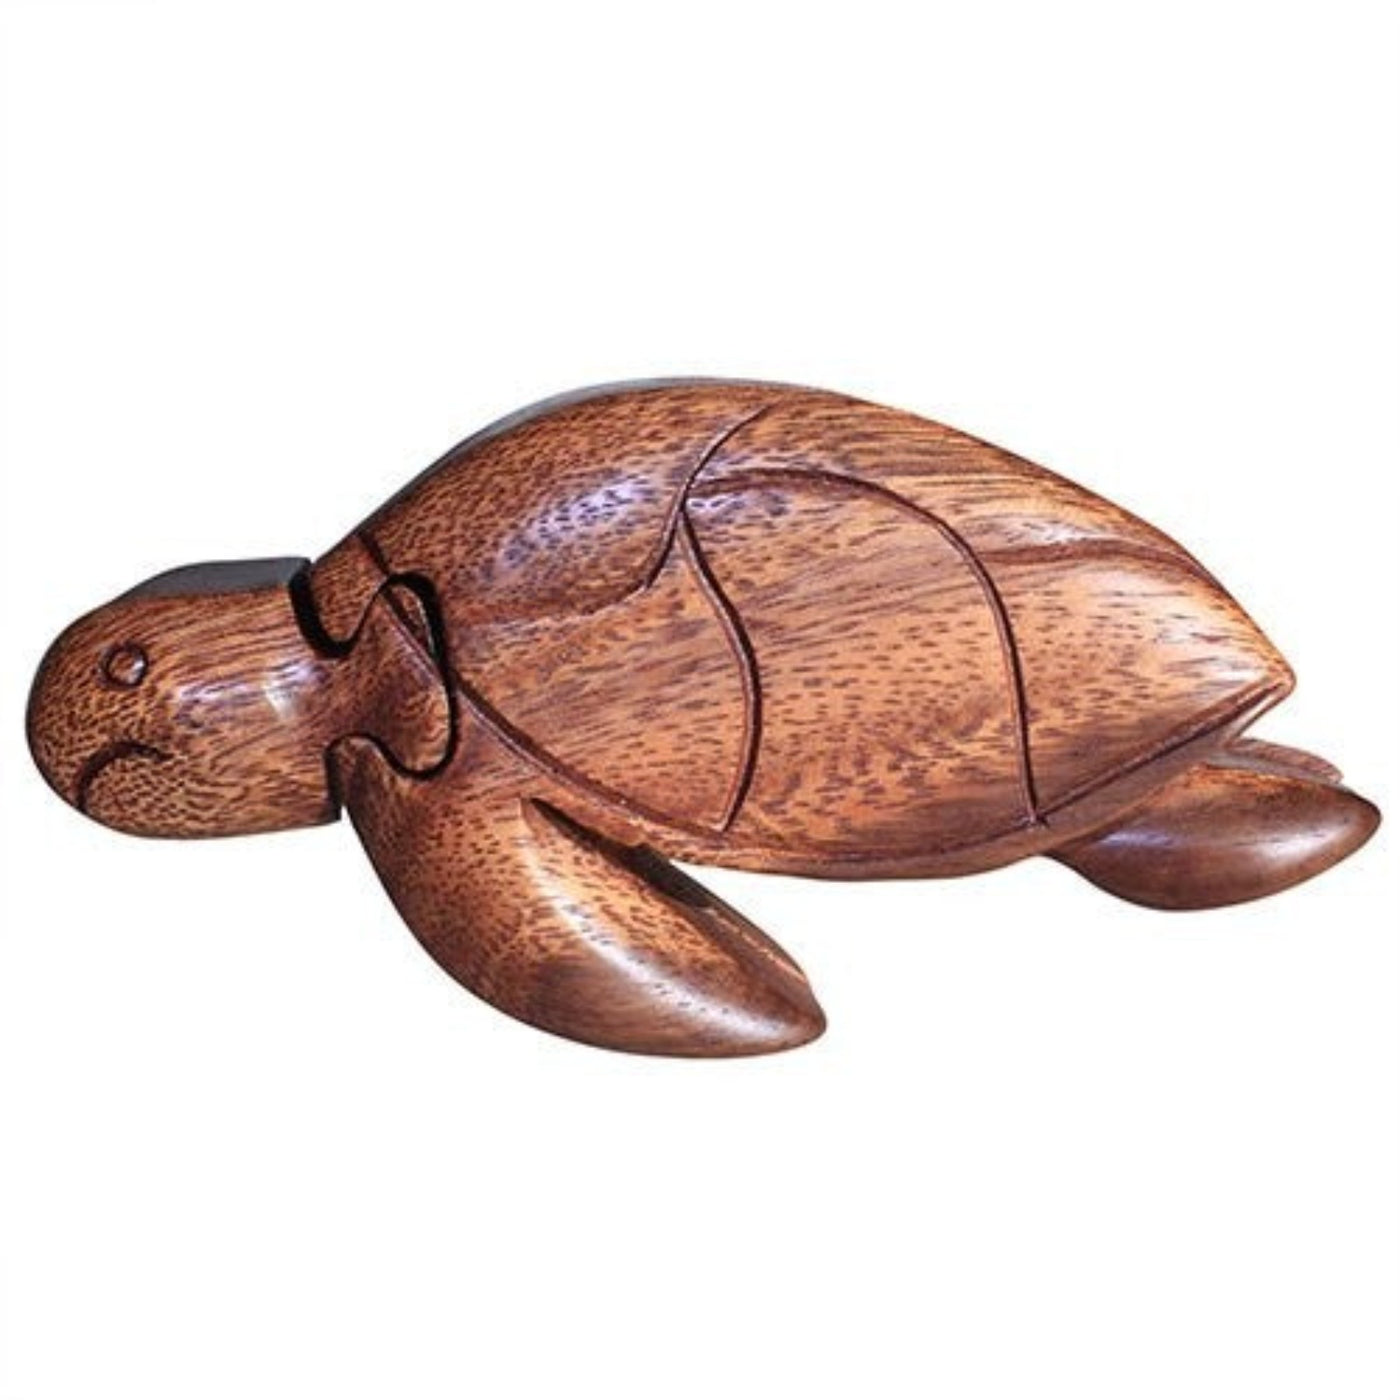 Handmade Turtle Shaped Wooden Magic Puzzle Storage Box.